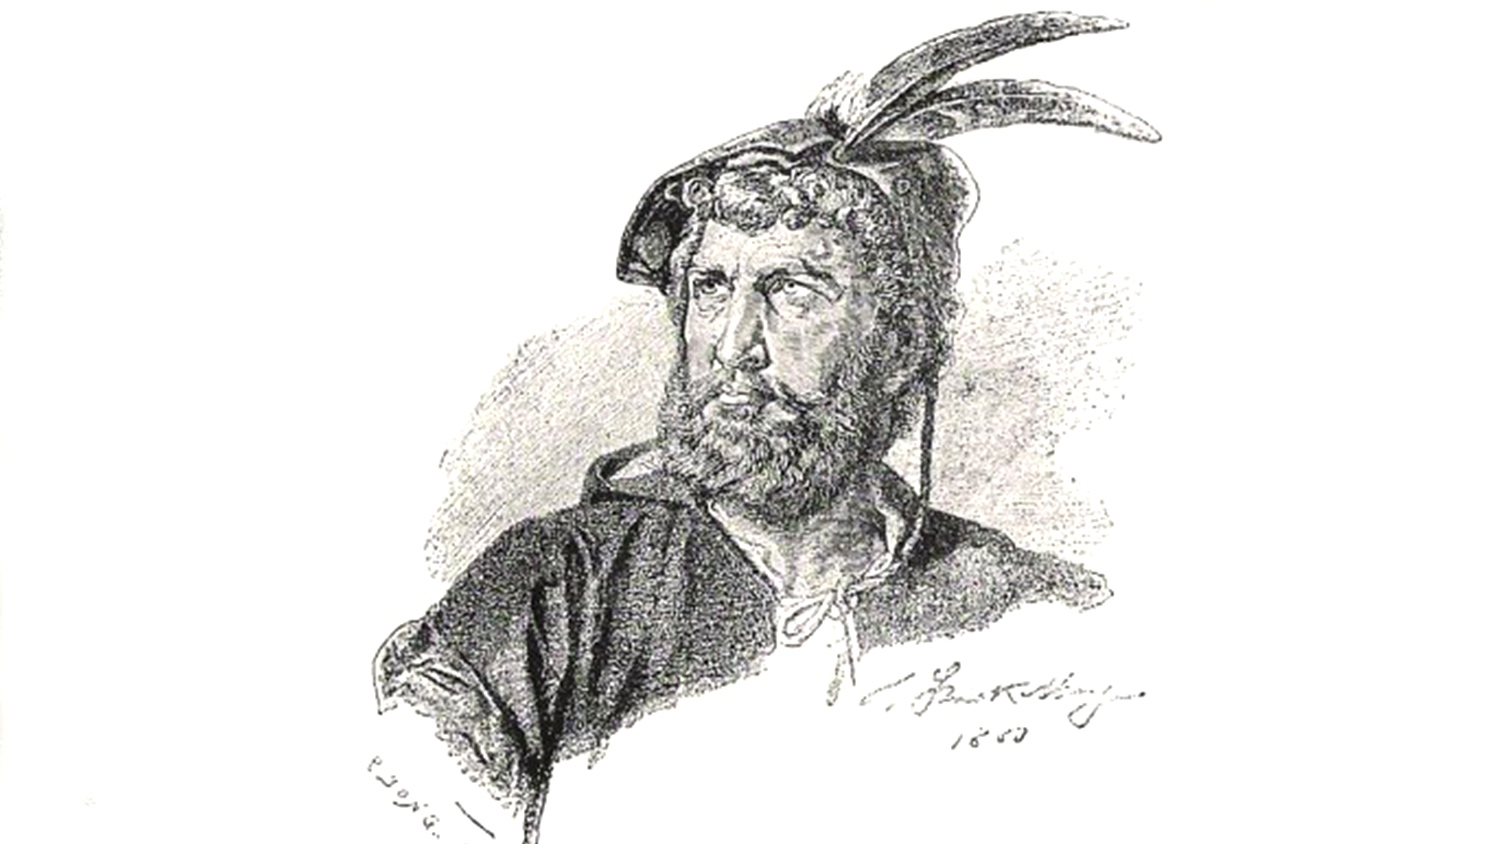 Sketch of William Tell